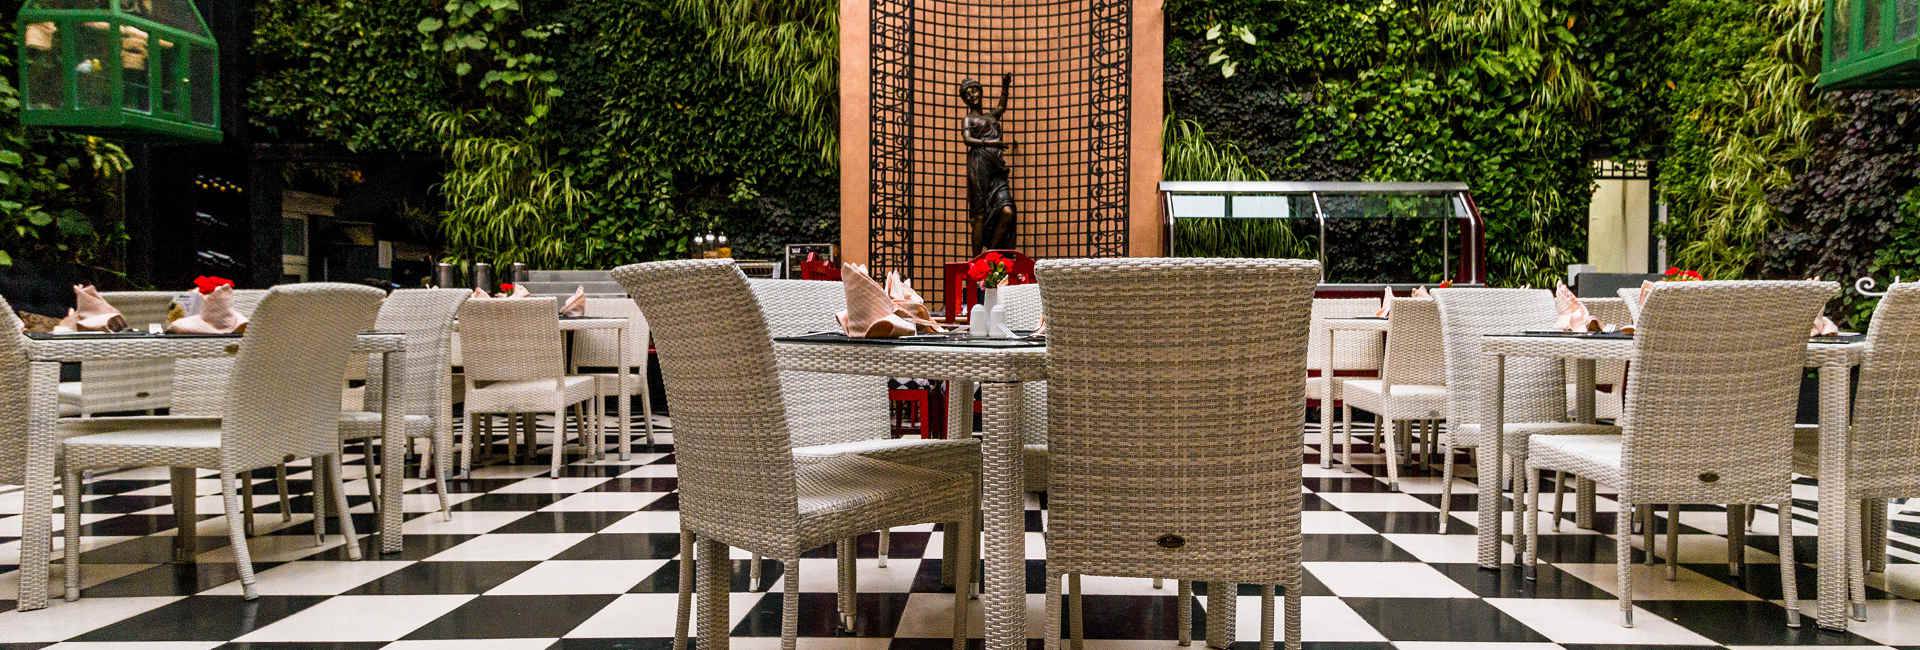 Exquisite gastronomy Geneve Mexico City Hotel